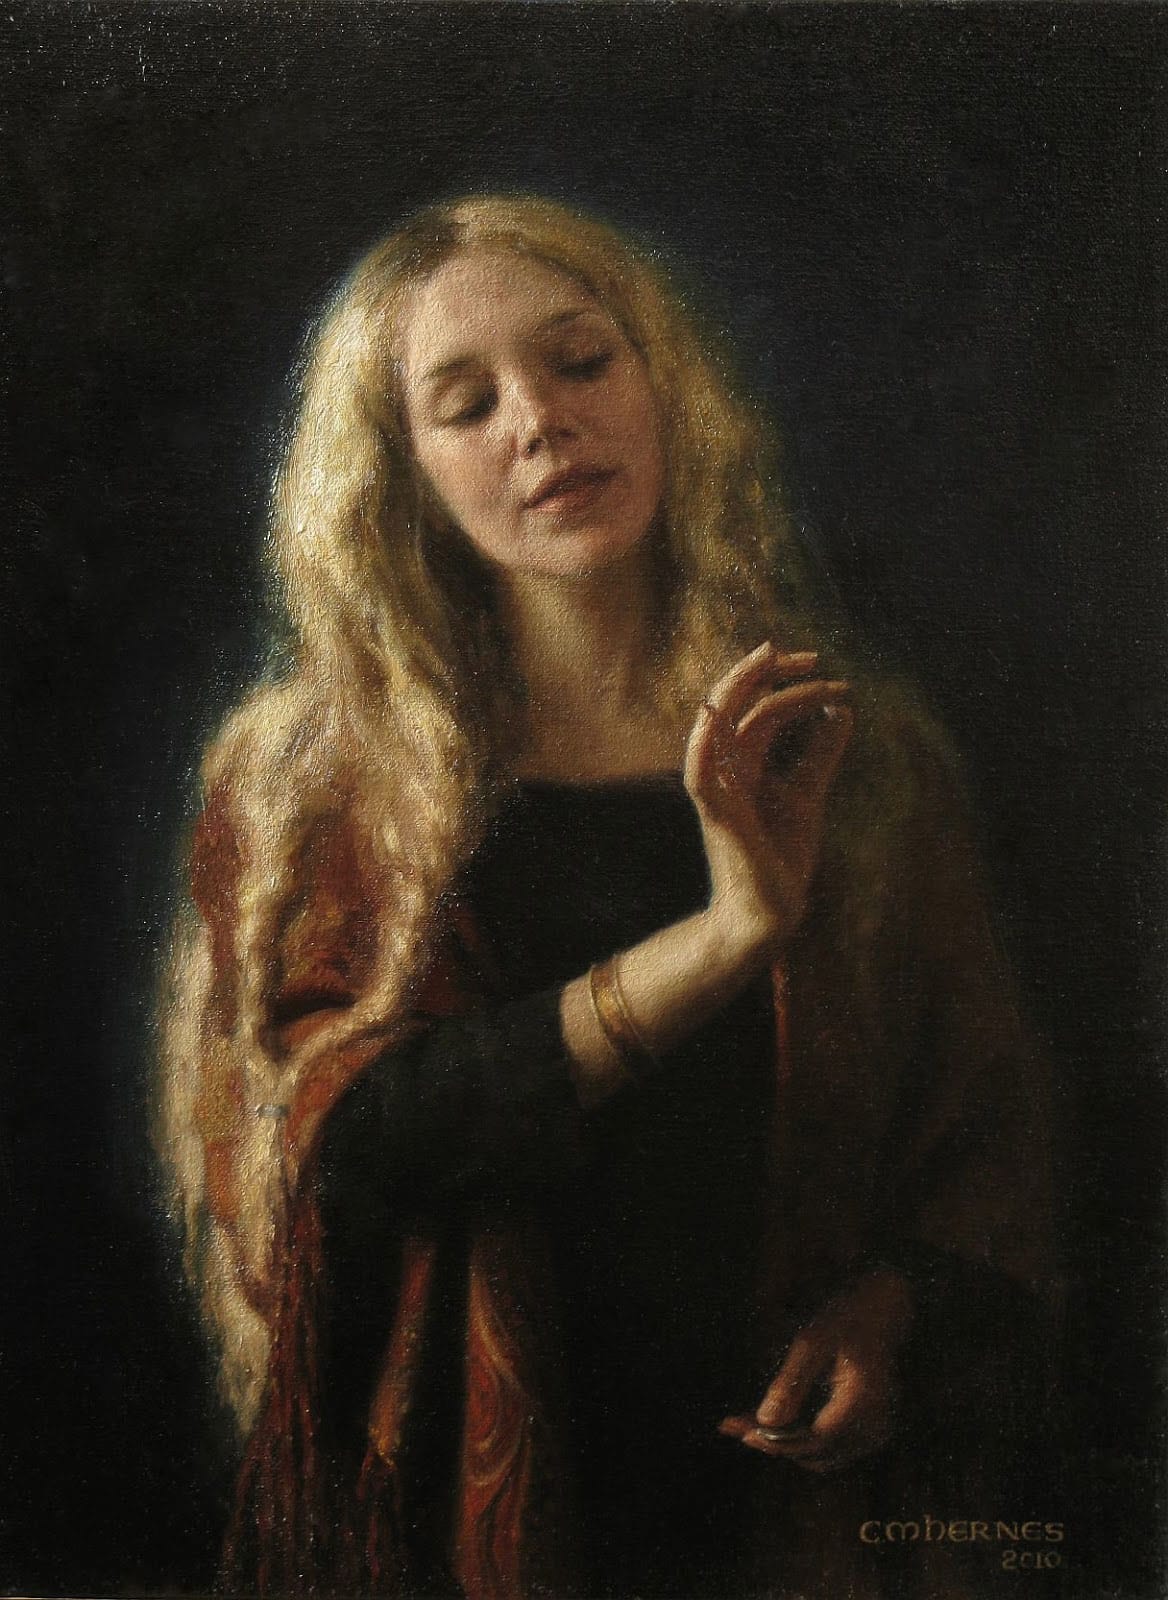 Cornelia Maria Hernes, Tooth Fairy, Oil on canvas, 32 x 45 cm, 2010